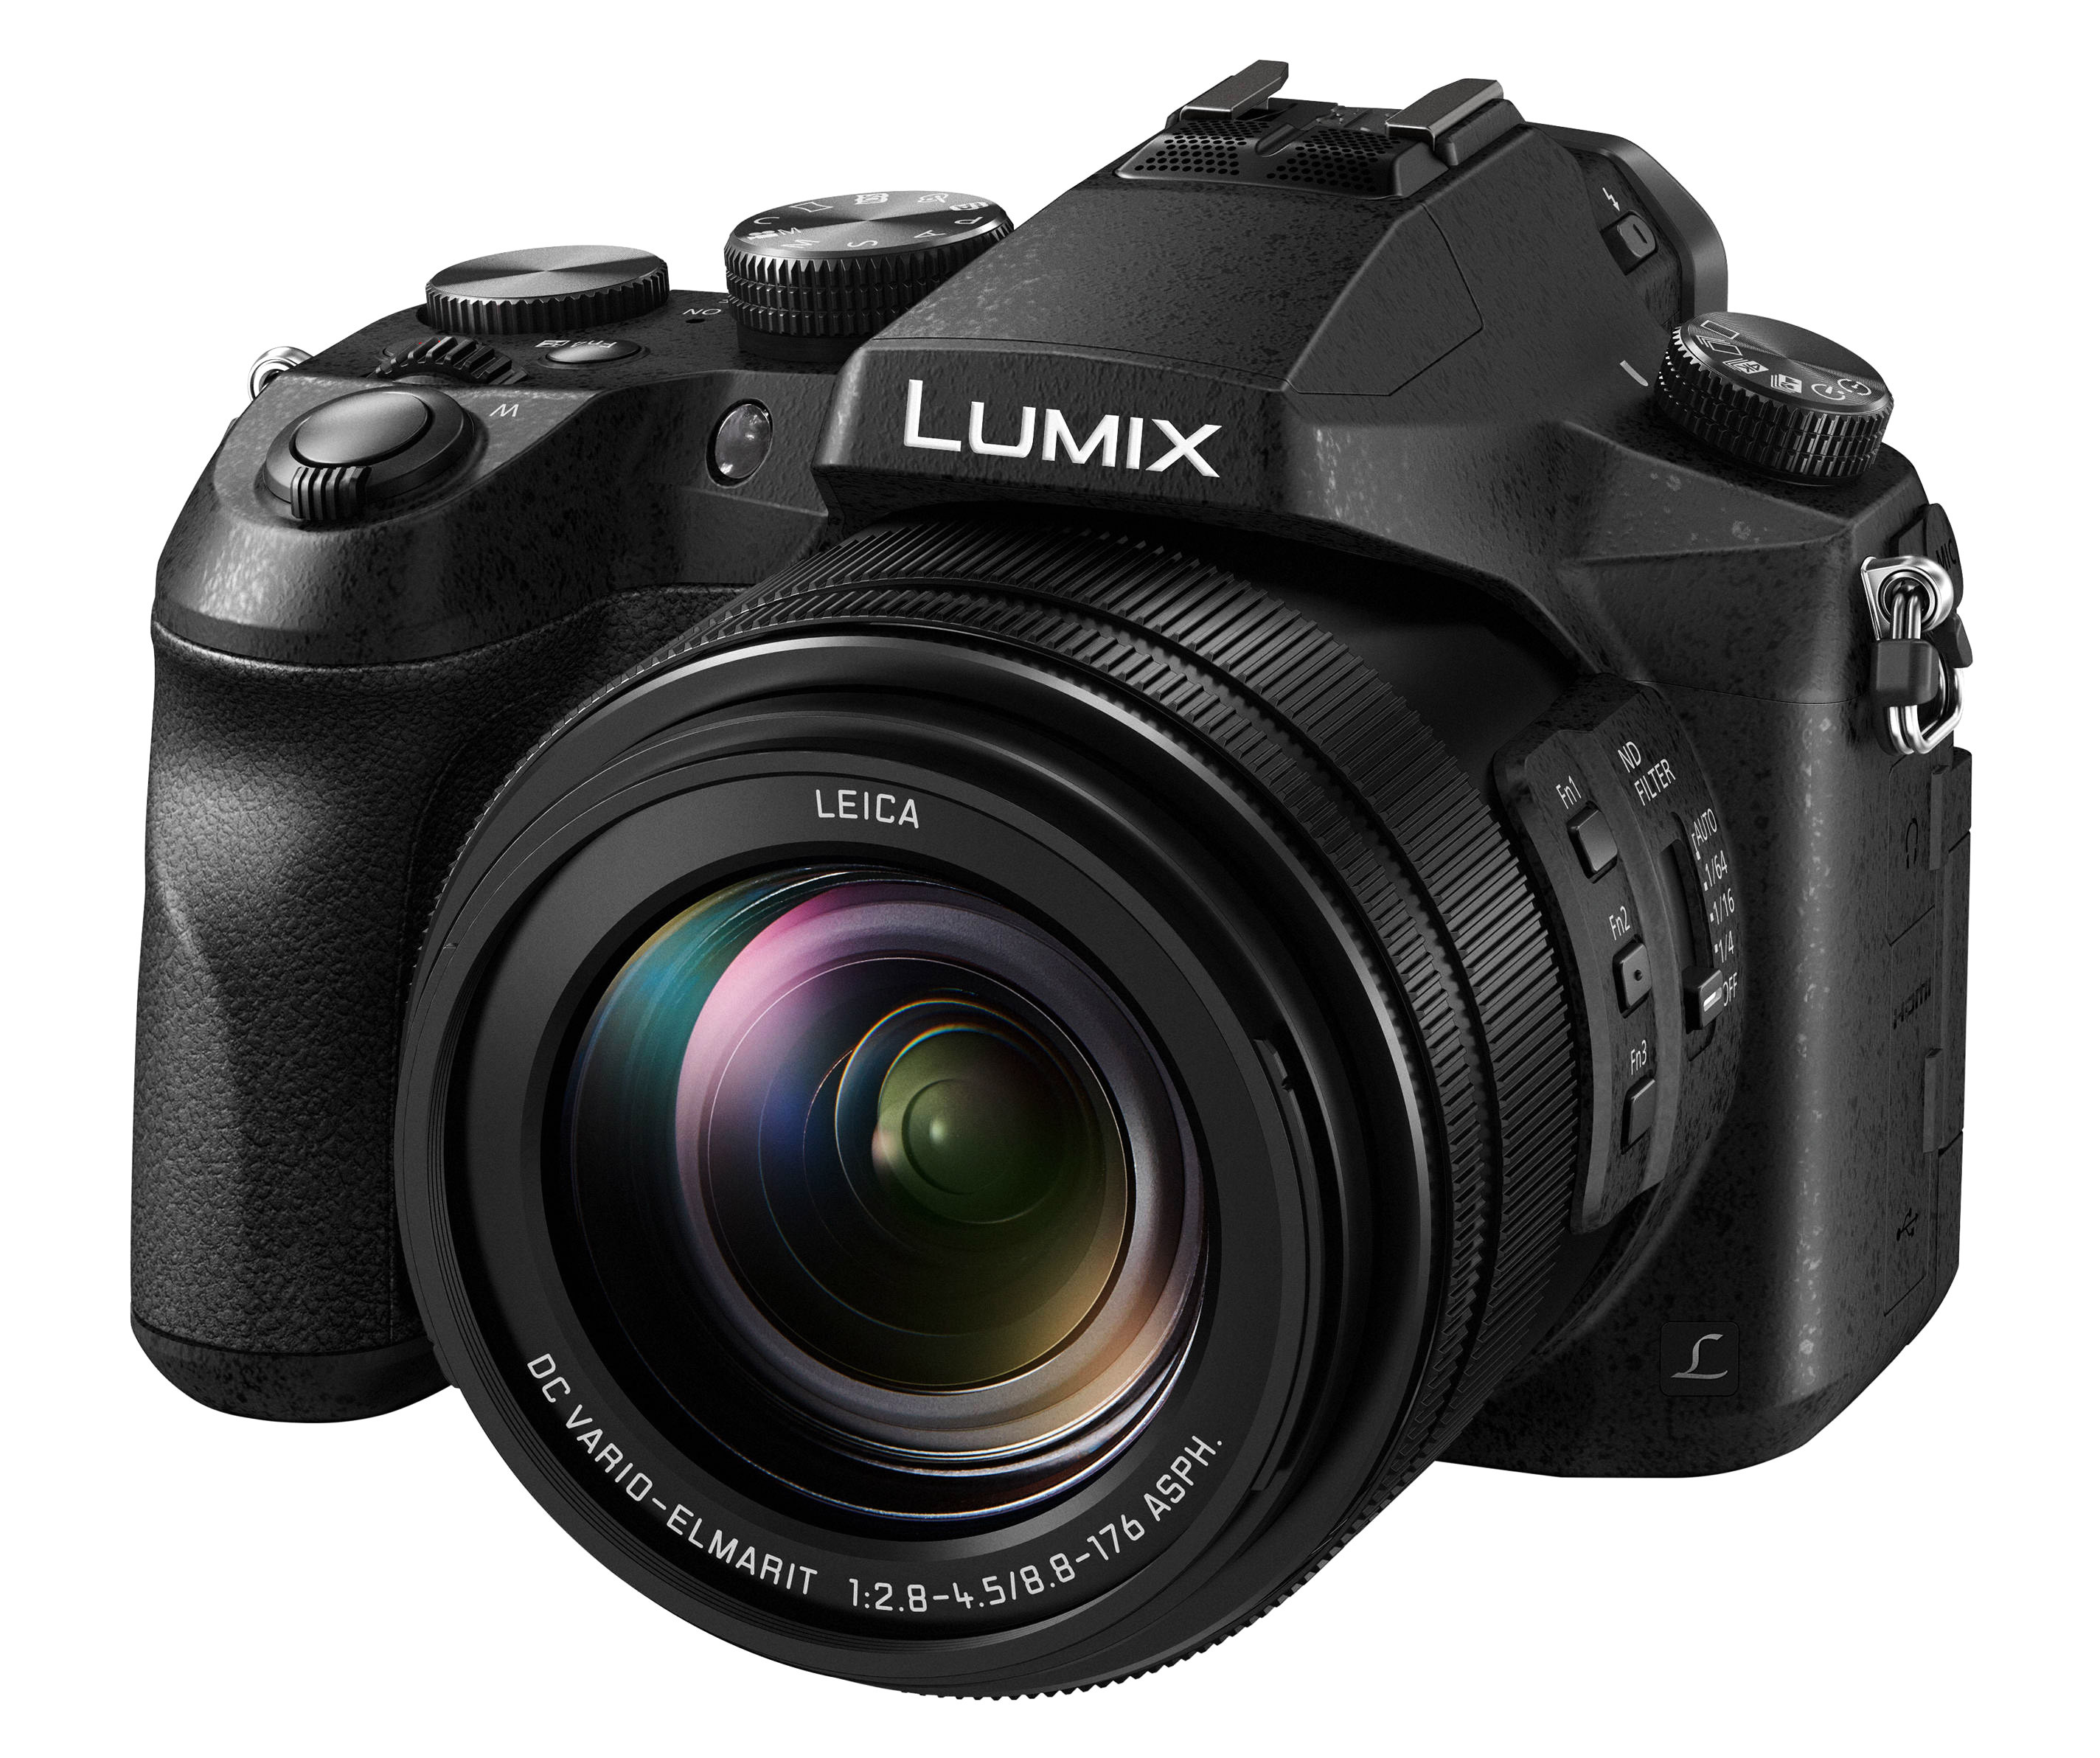 Fotocamera Bridge Panasonic LUMIX DMC-FZ2000 Black 